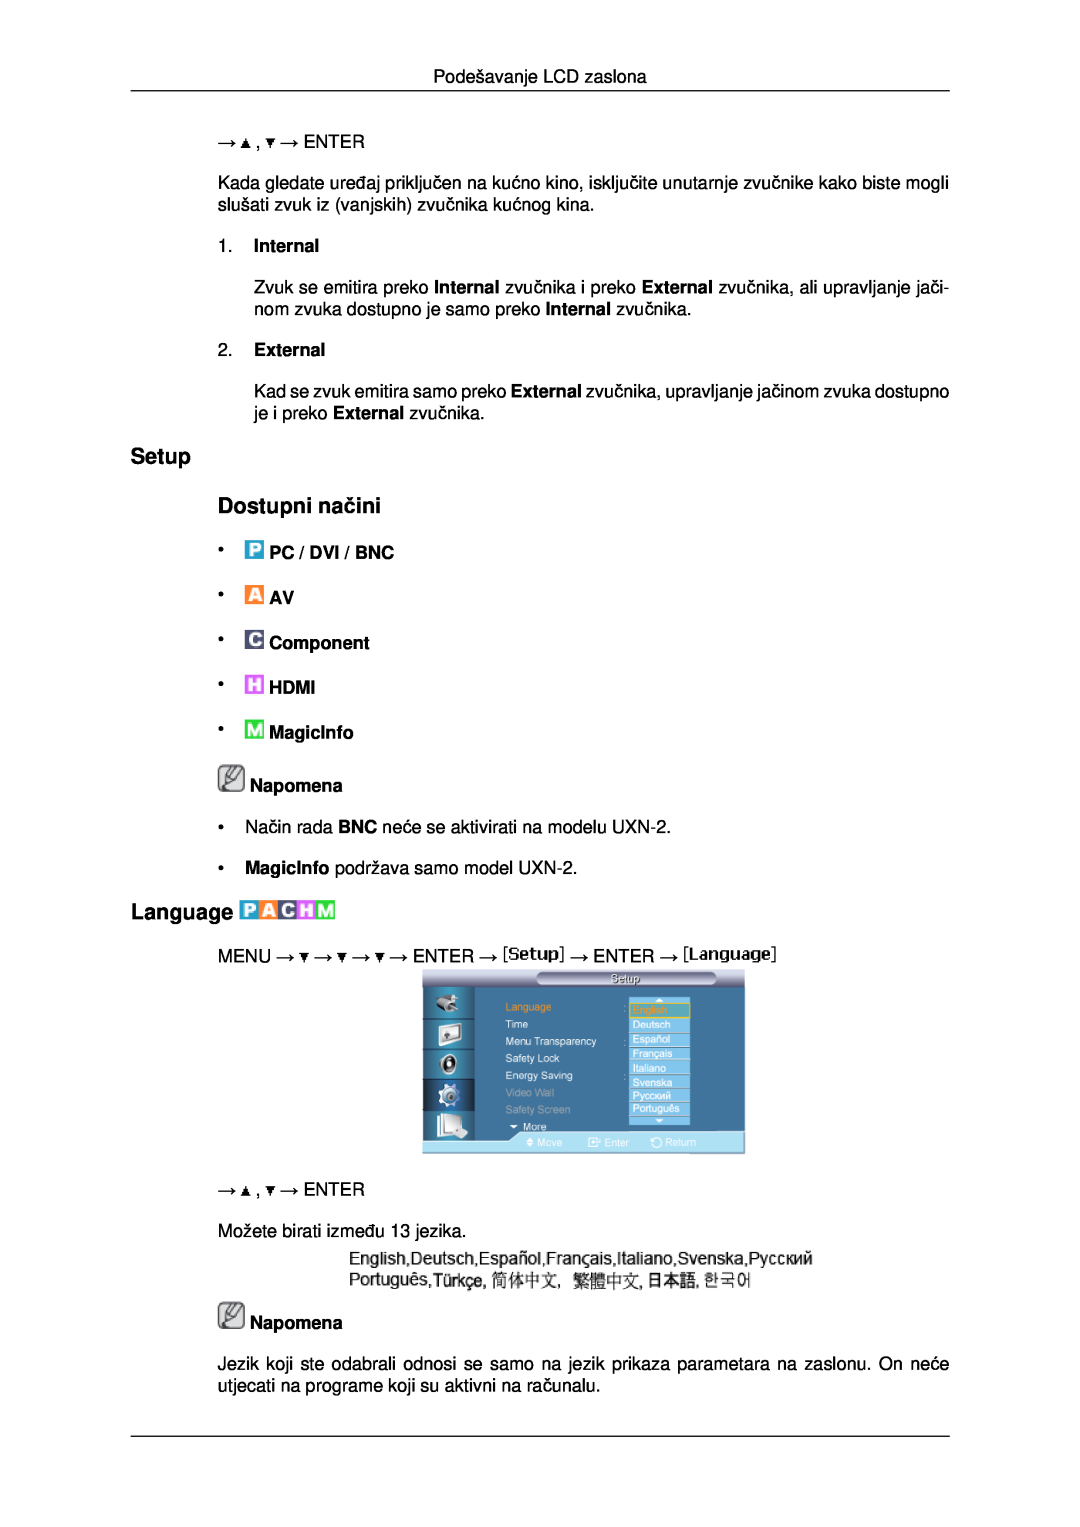 Samsung LH46MRTLBC/EN, LH40MRTLBC/EN, LH46MSTLBB/EN manual Setup Dostupni načini, Language, Internal, External, Napomena 